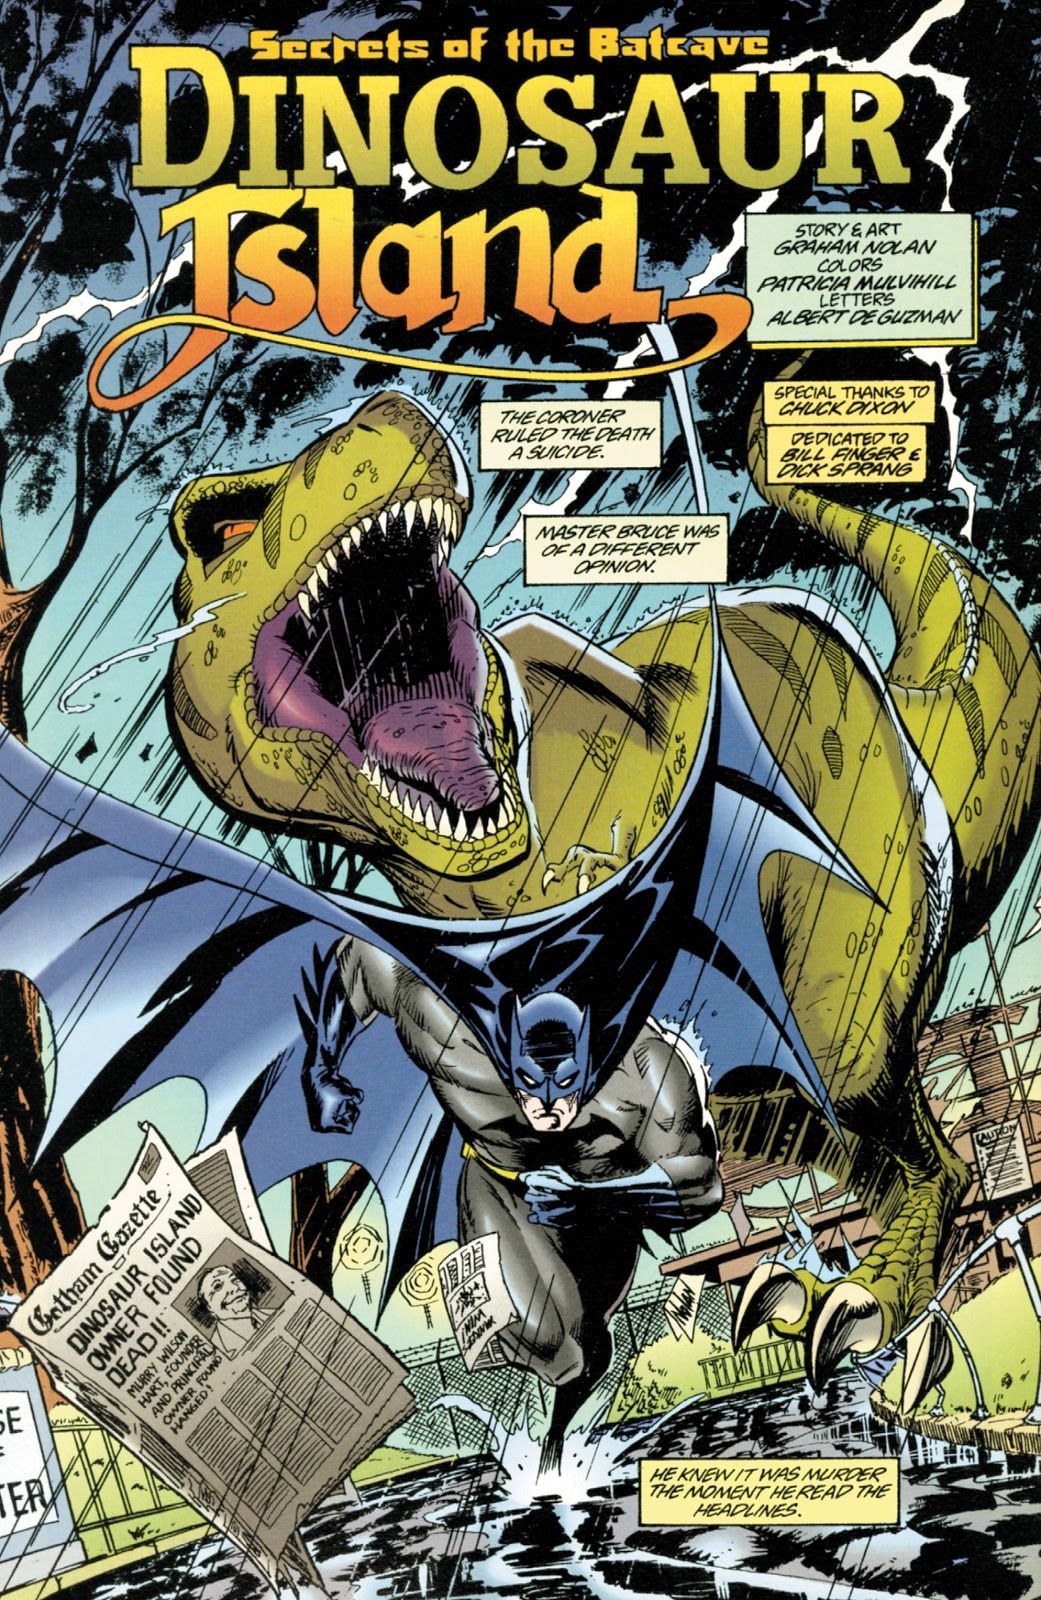 The origin of the T-Rex in Batman Chronicles Issue 8 Dinosaur Island